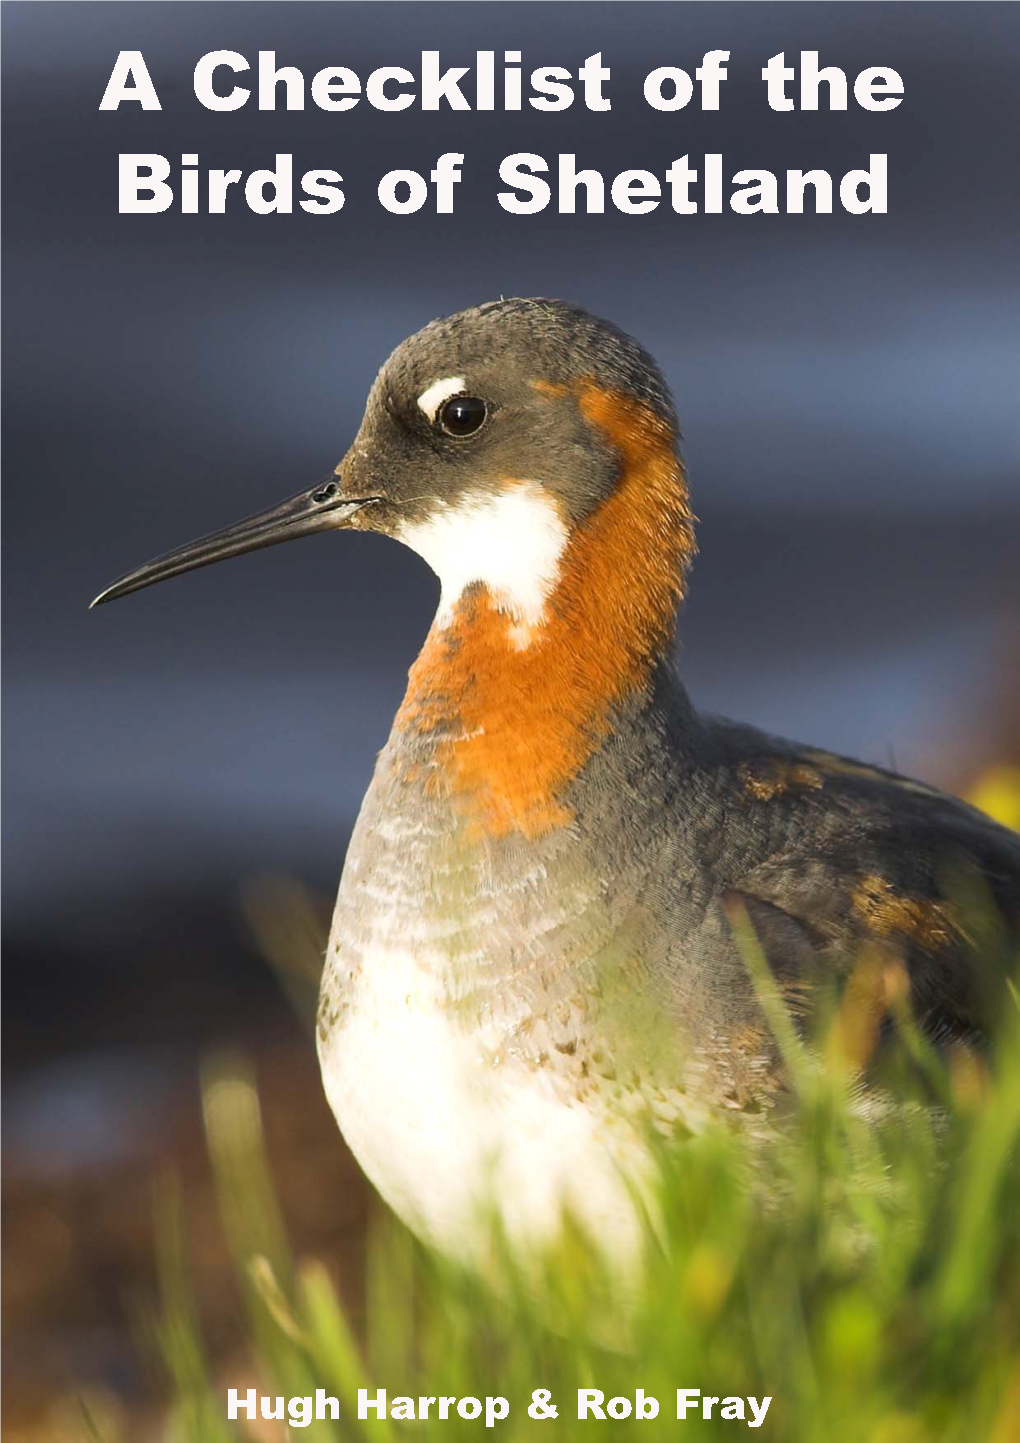 Checklist of the Birds of Shetland by Hugh Harrop & Rob Fray